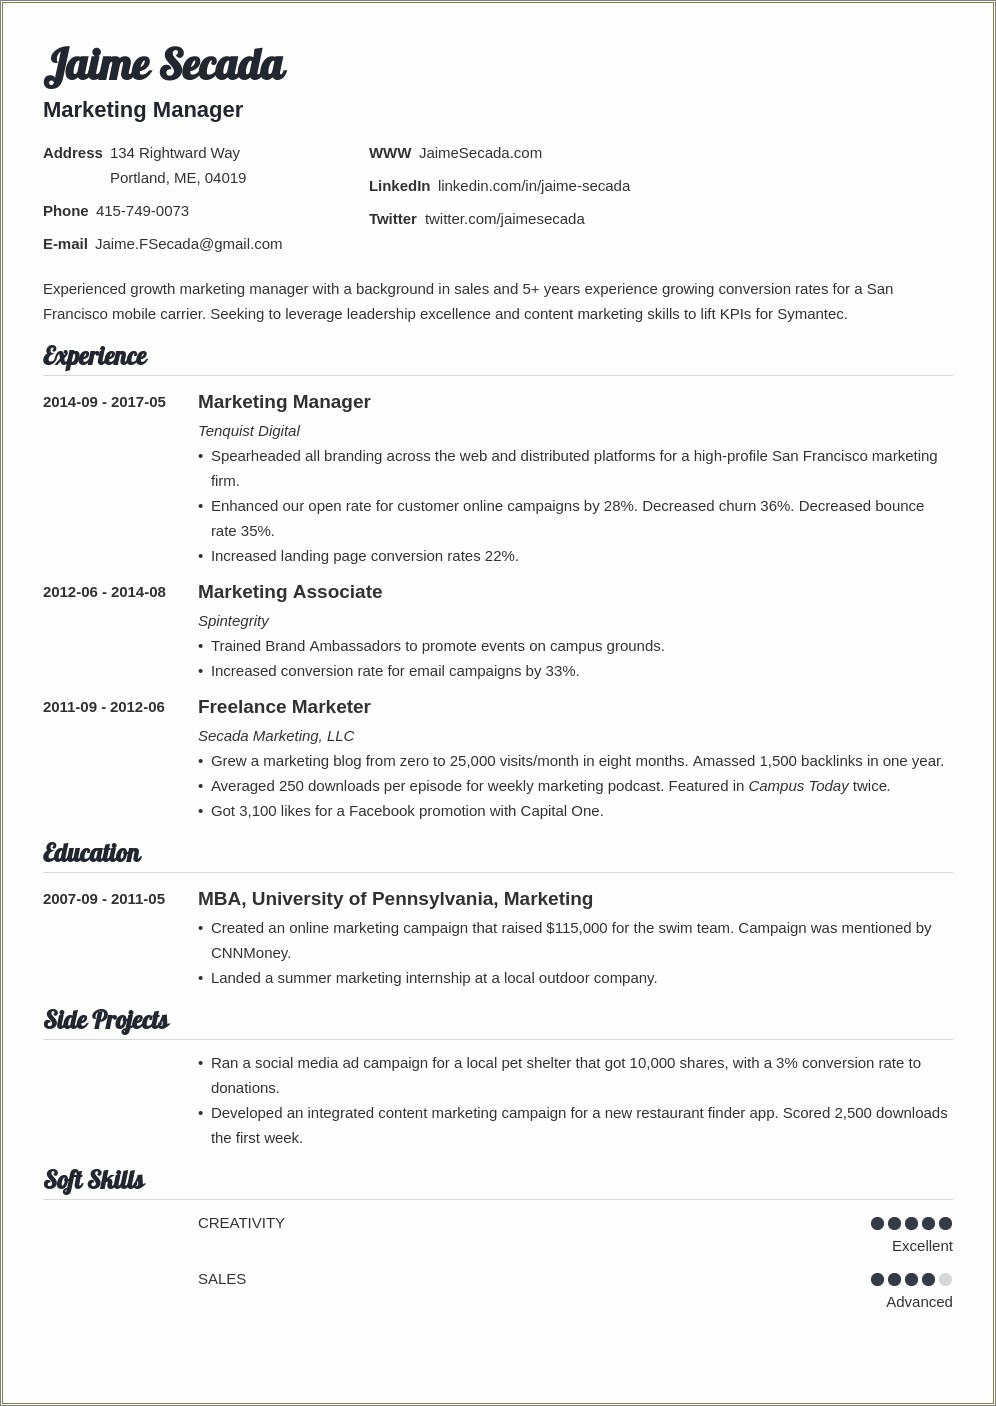 Sample Resume Objective For Marketing Graduate